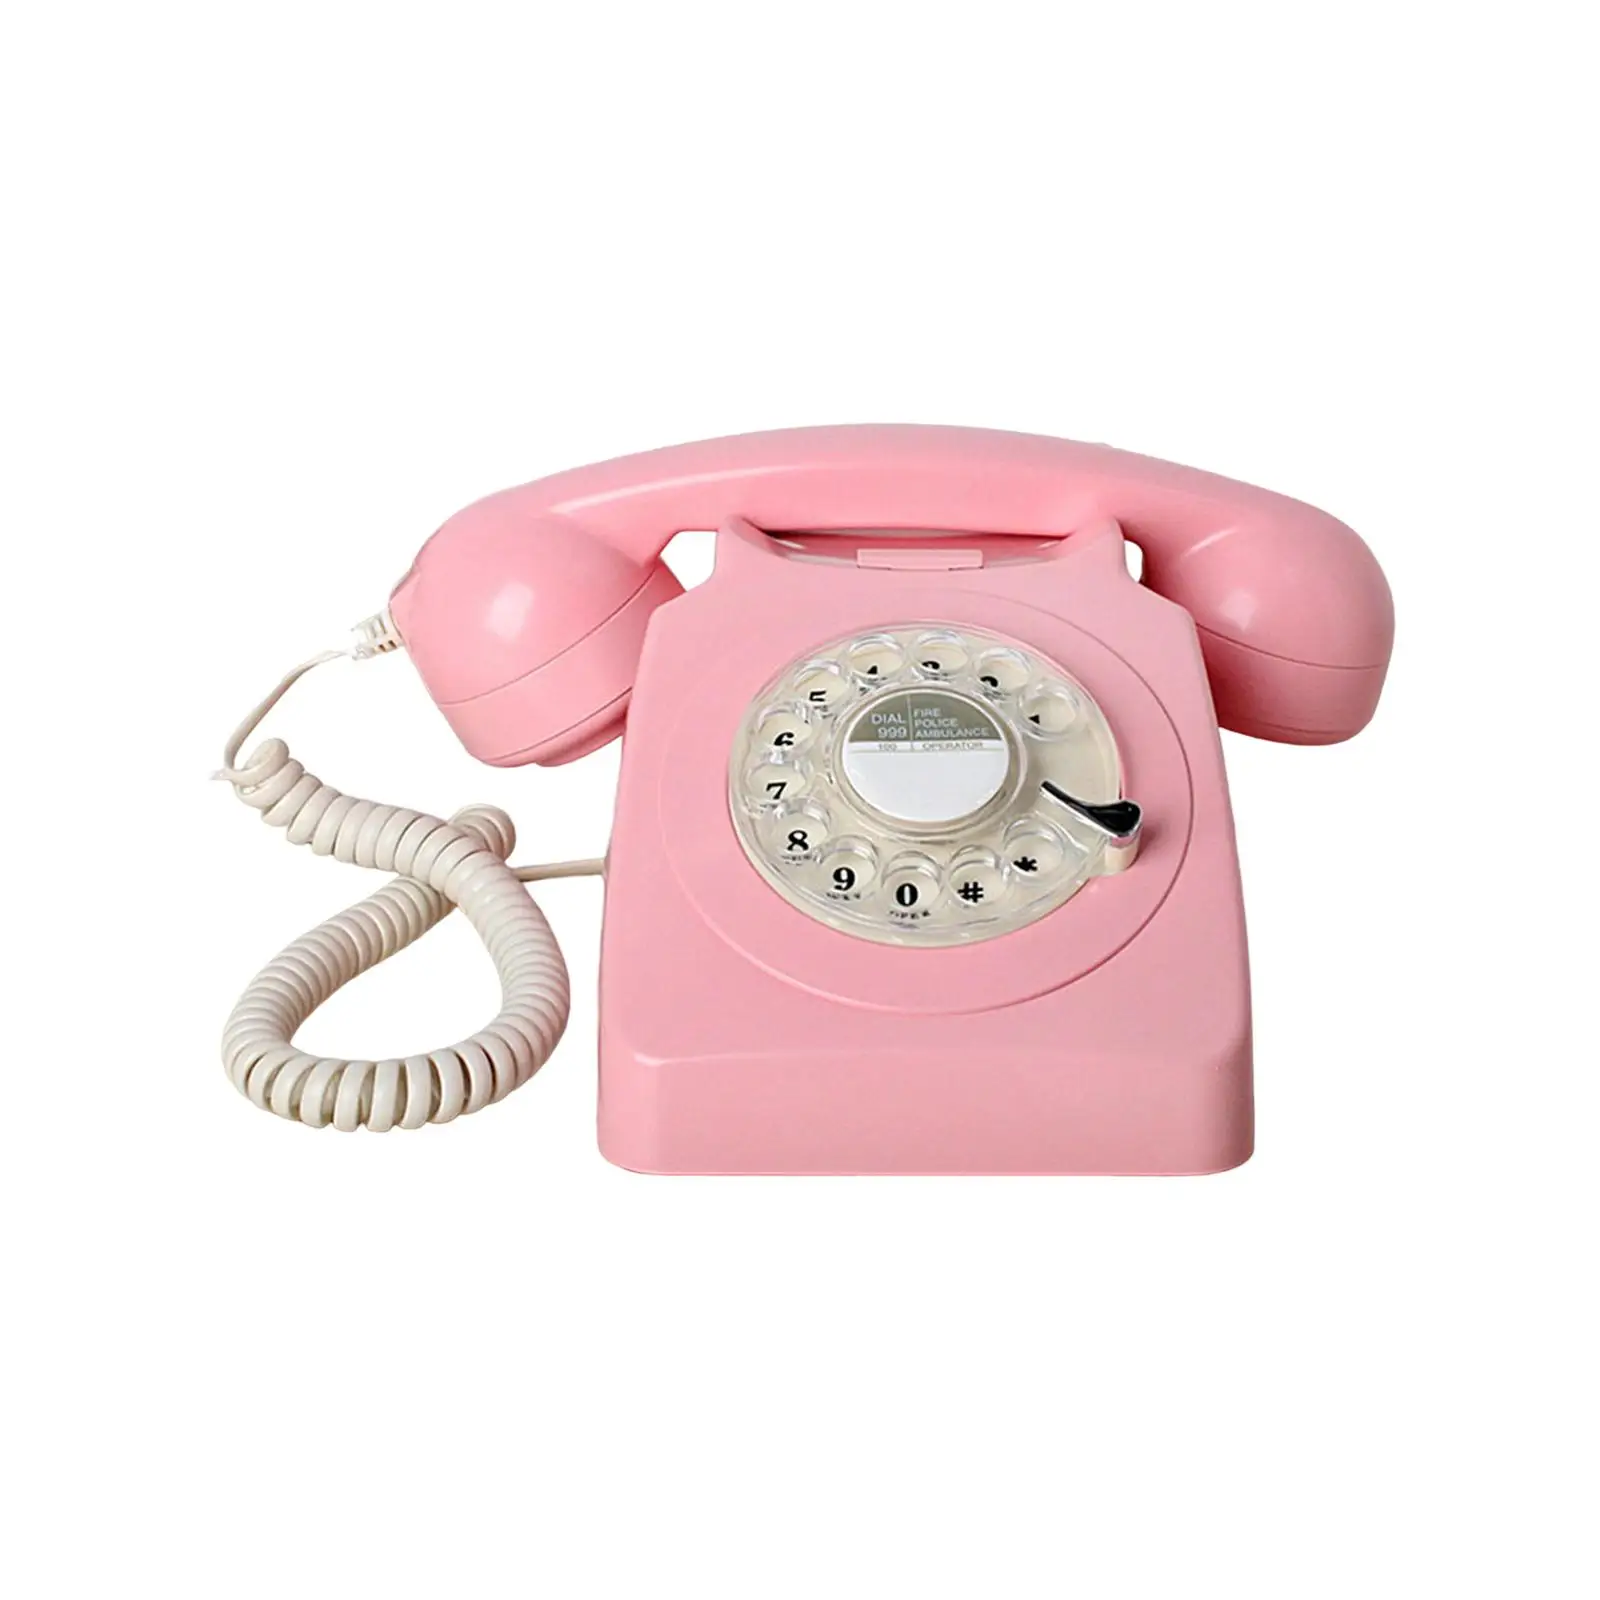 Vintage Rotary Dial Phone Corded Telephone Old Fashion Retro Landline Phone